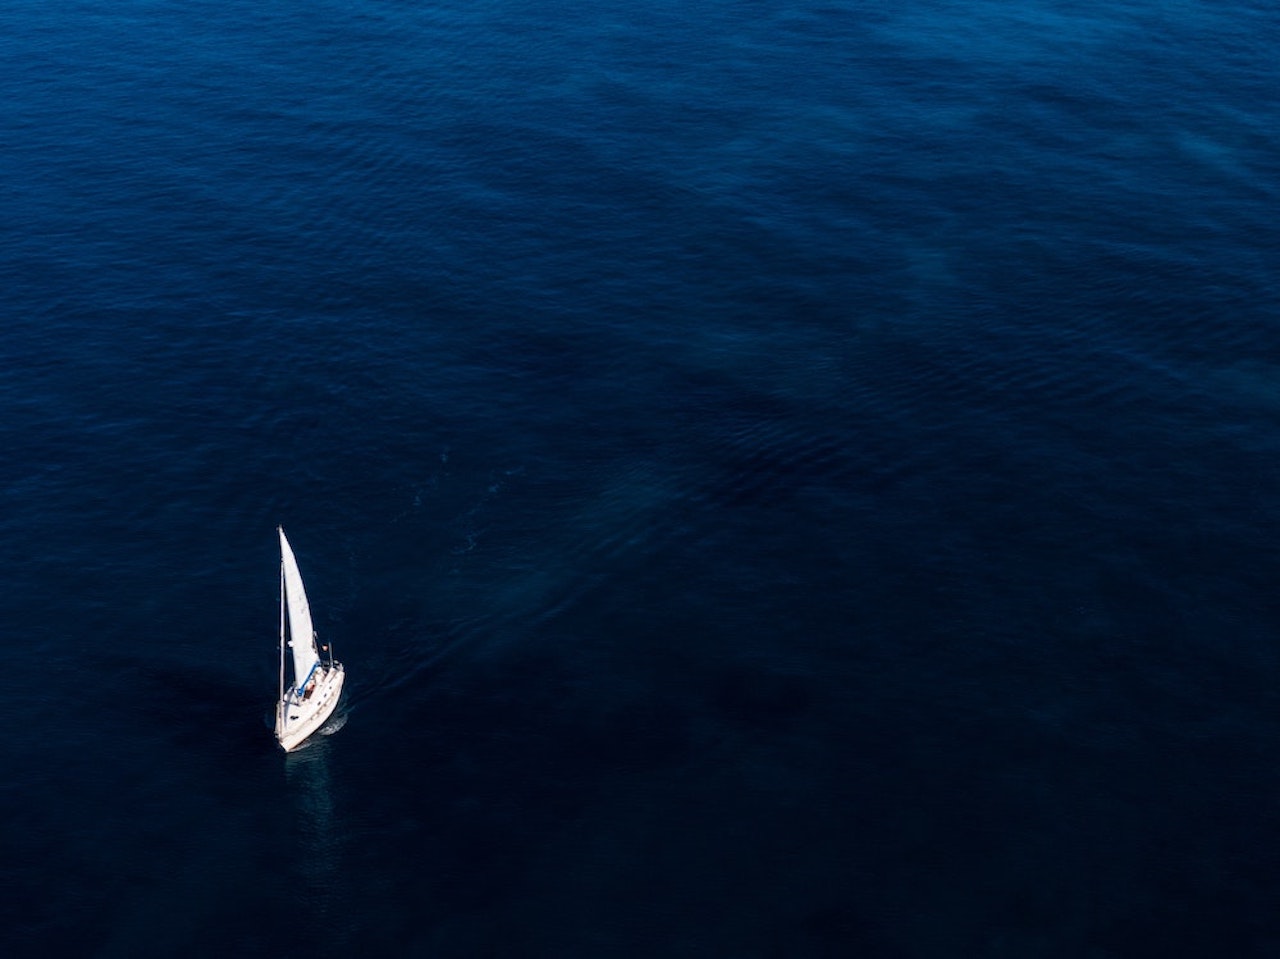 A yacht in the Mediterranean Sea